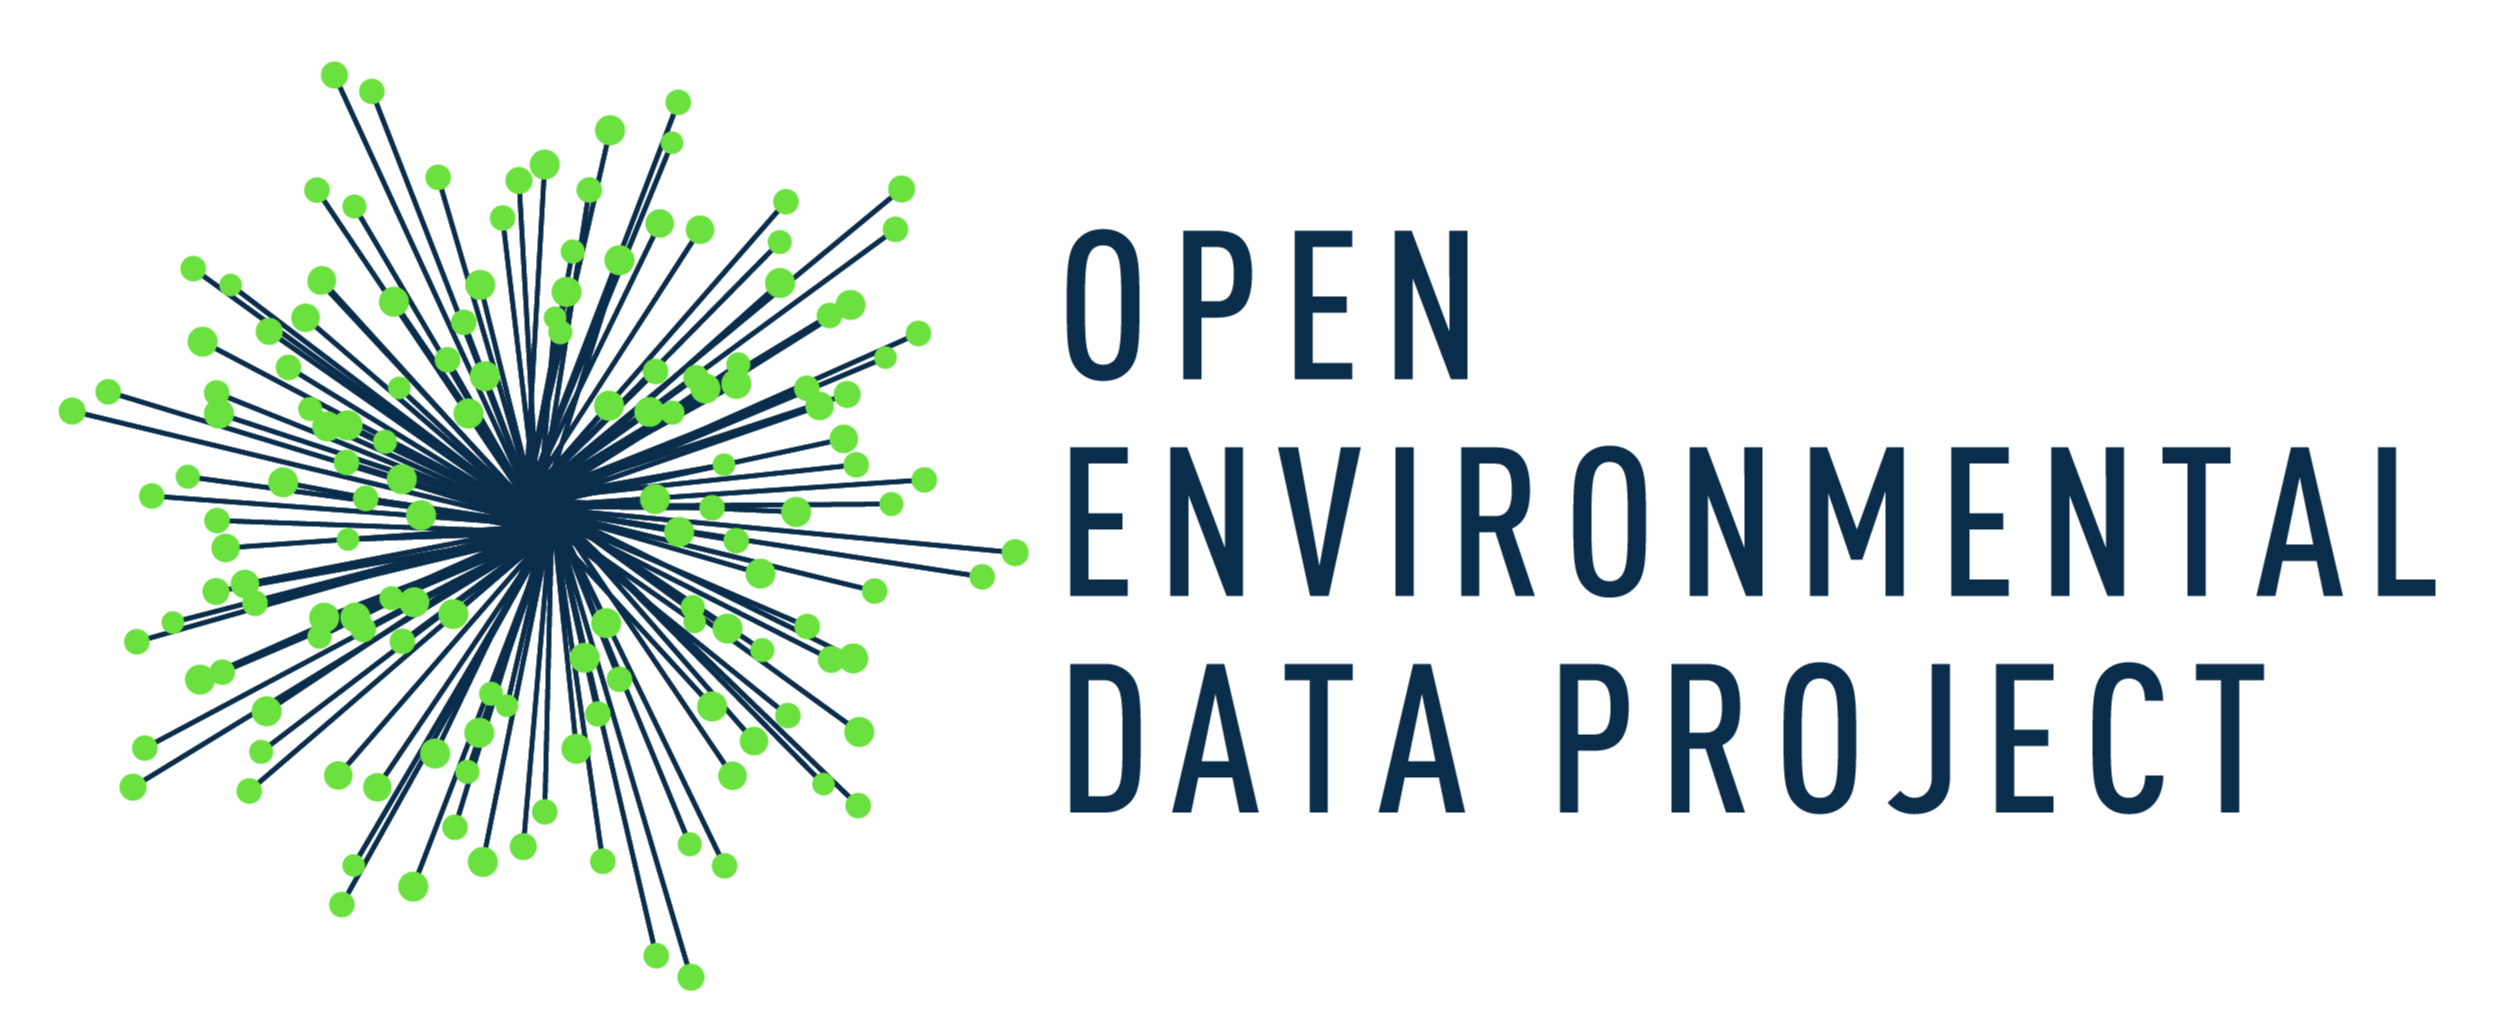 Open Environmental Data Project logo